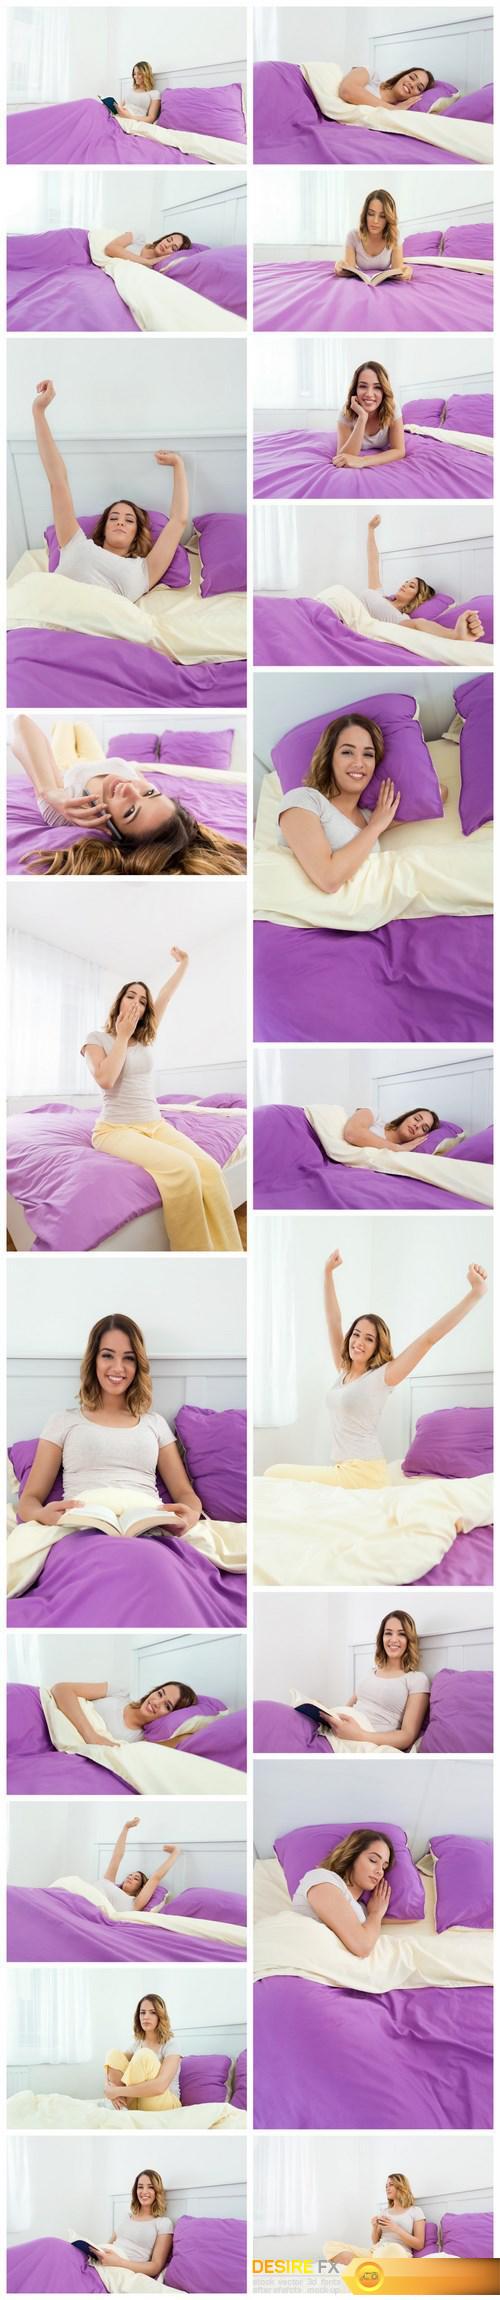 Beautiful young woman is sleeping in bed - 20xUHQ JPEG